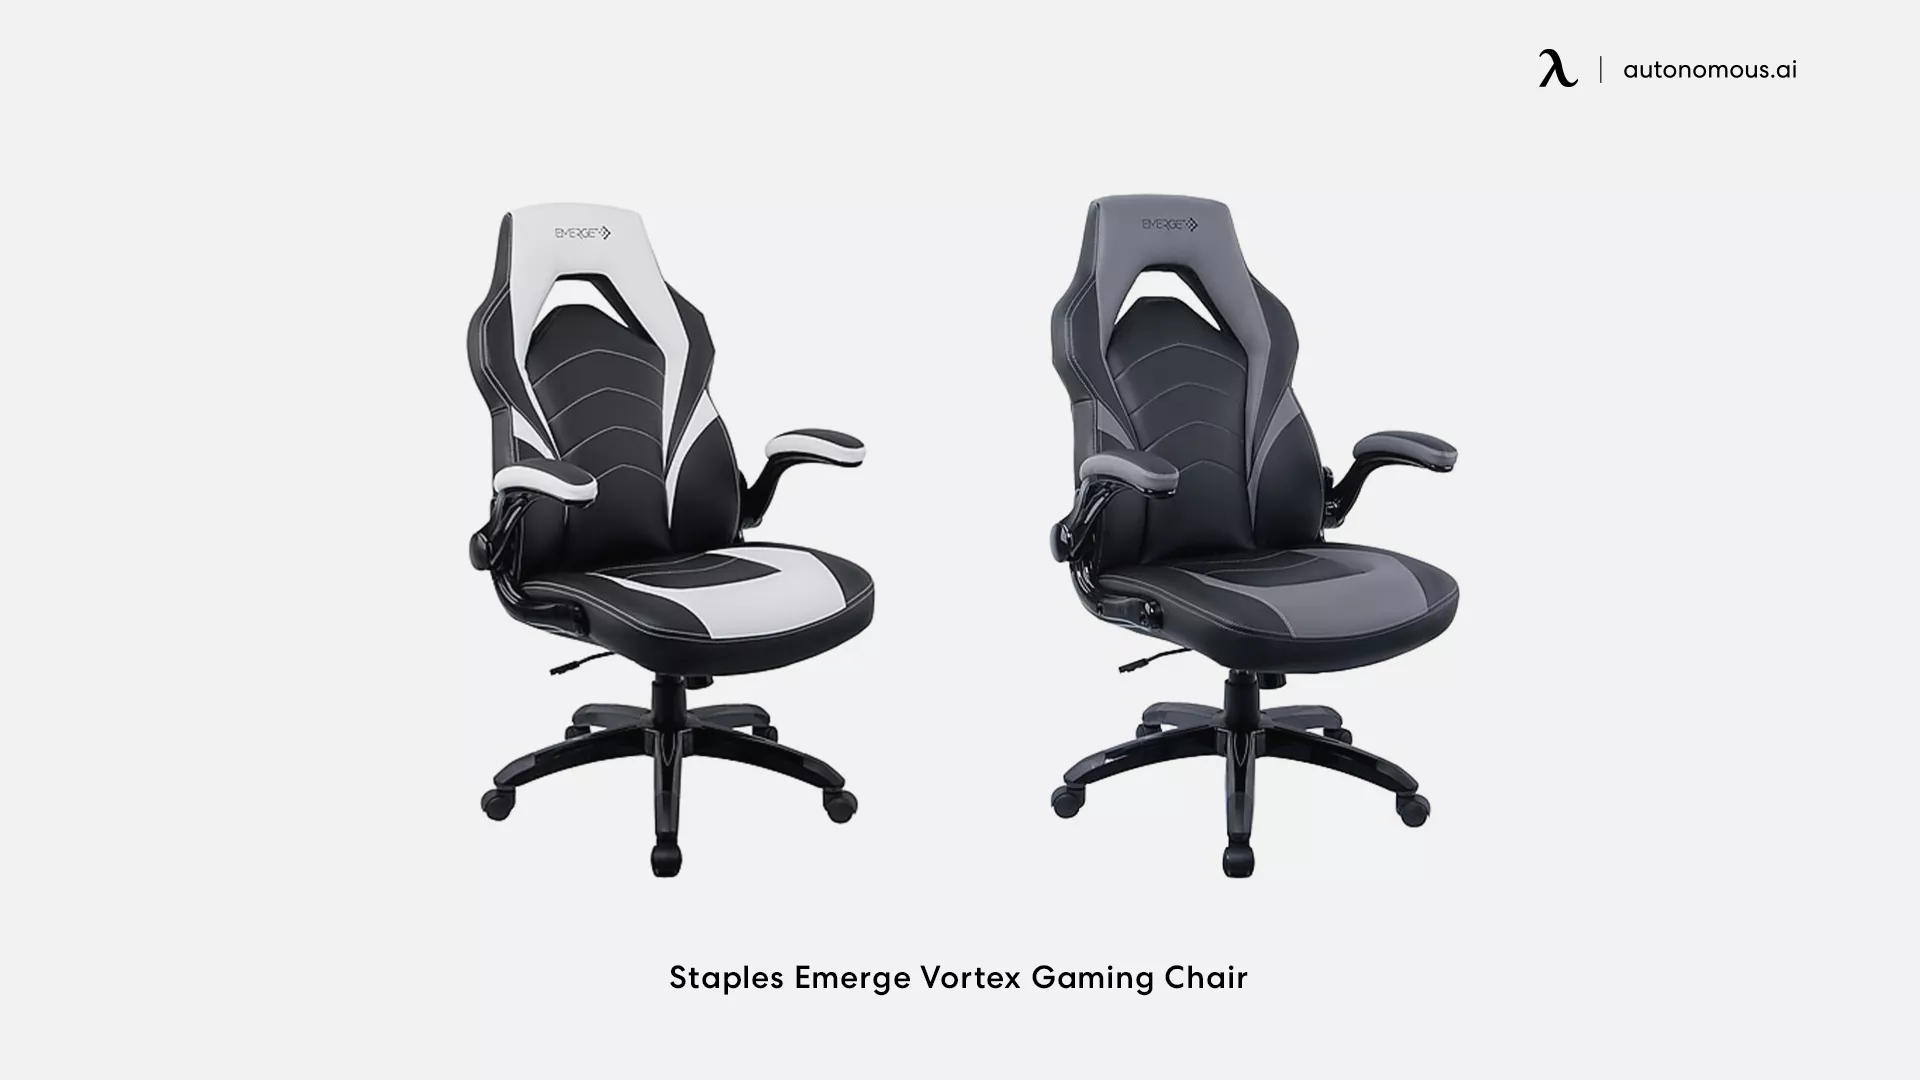 Staples Emerge Vortex Gaming Chair